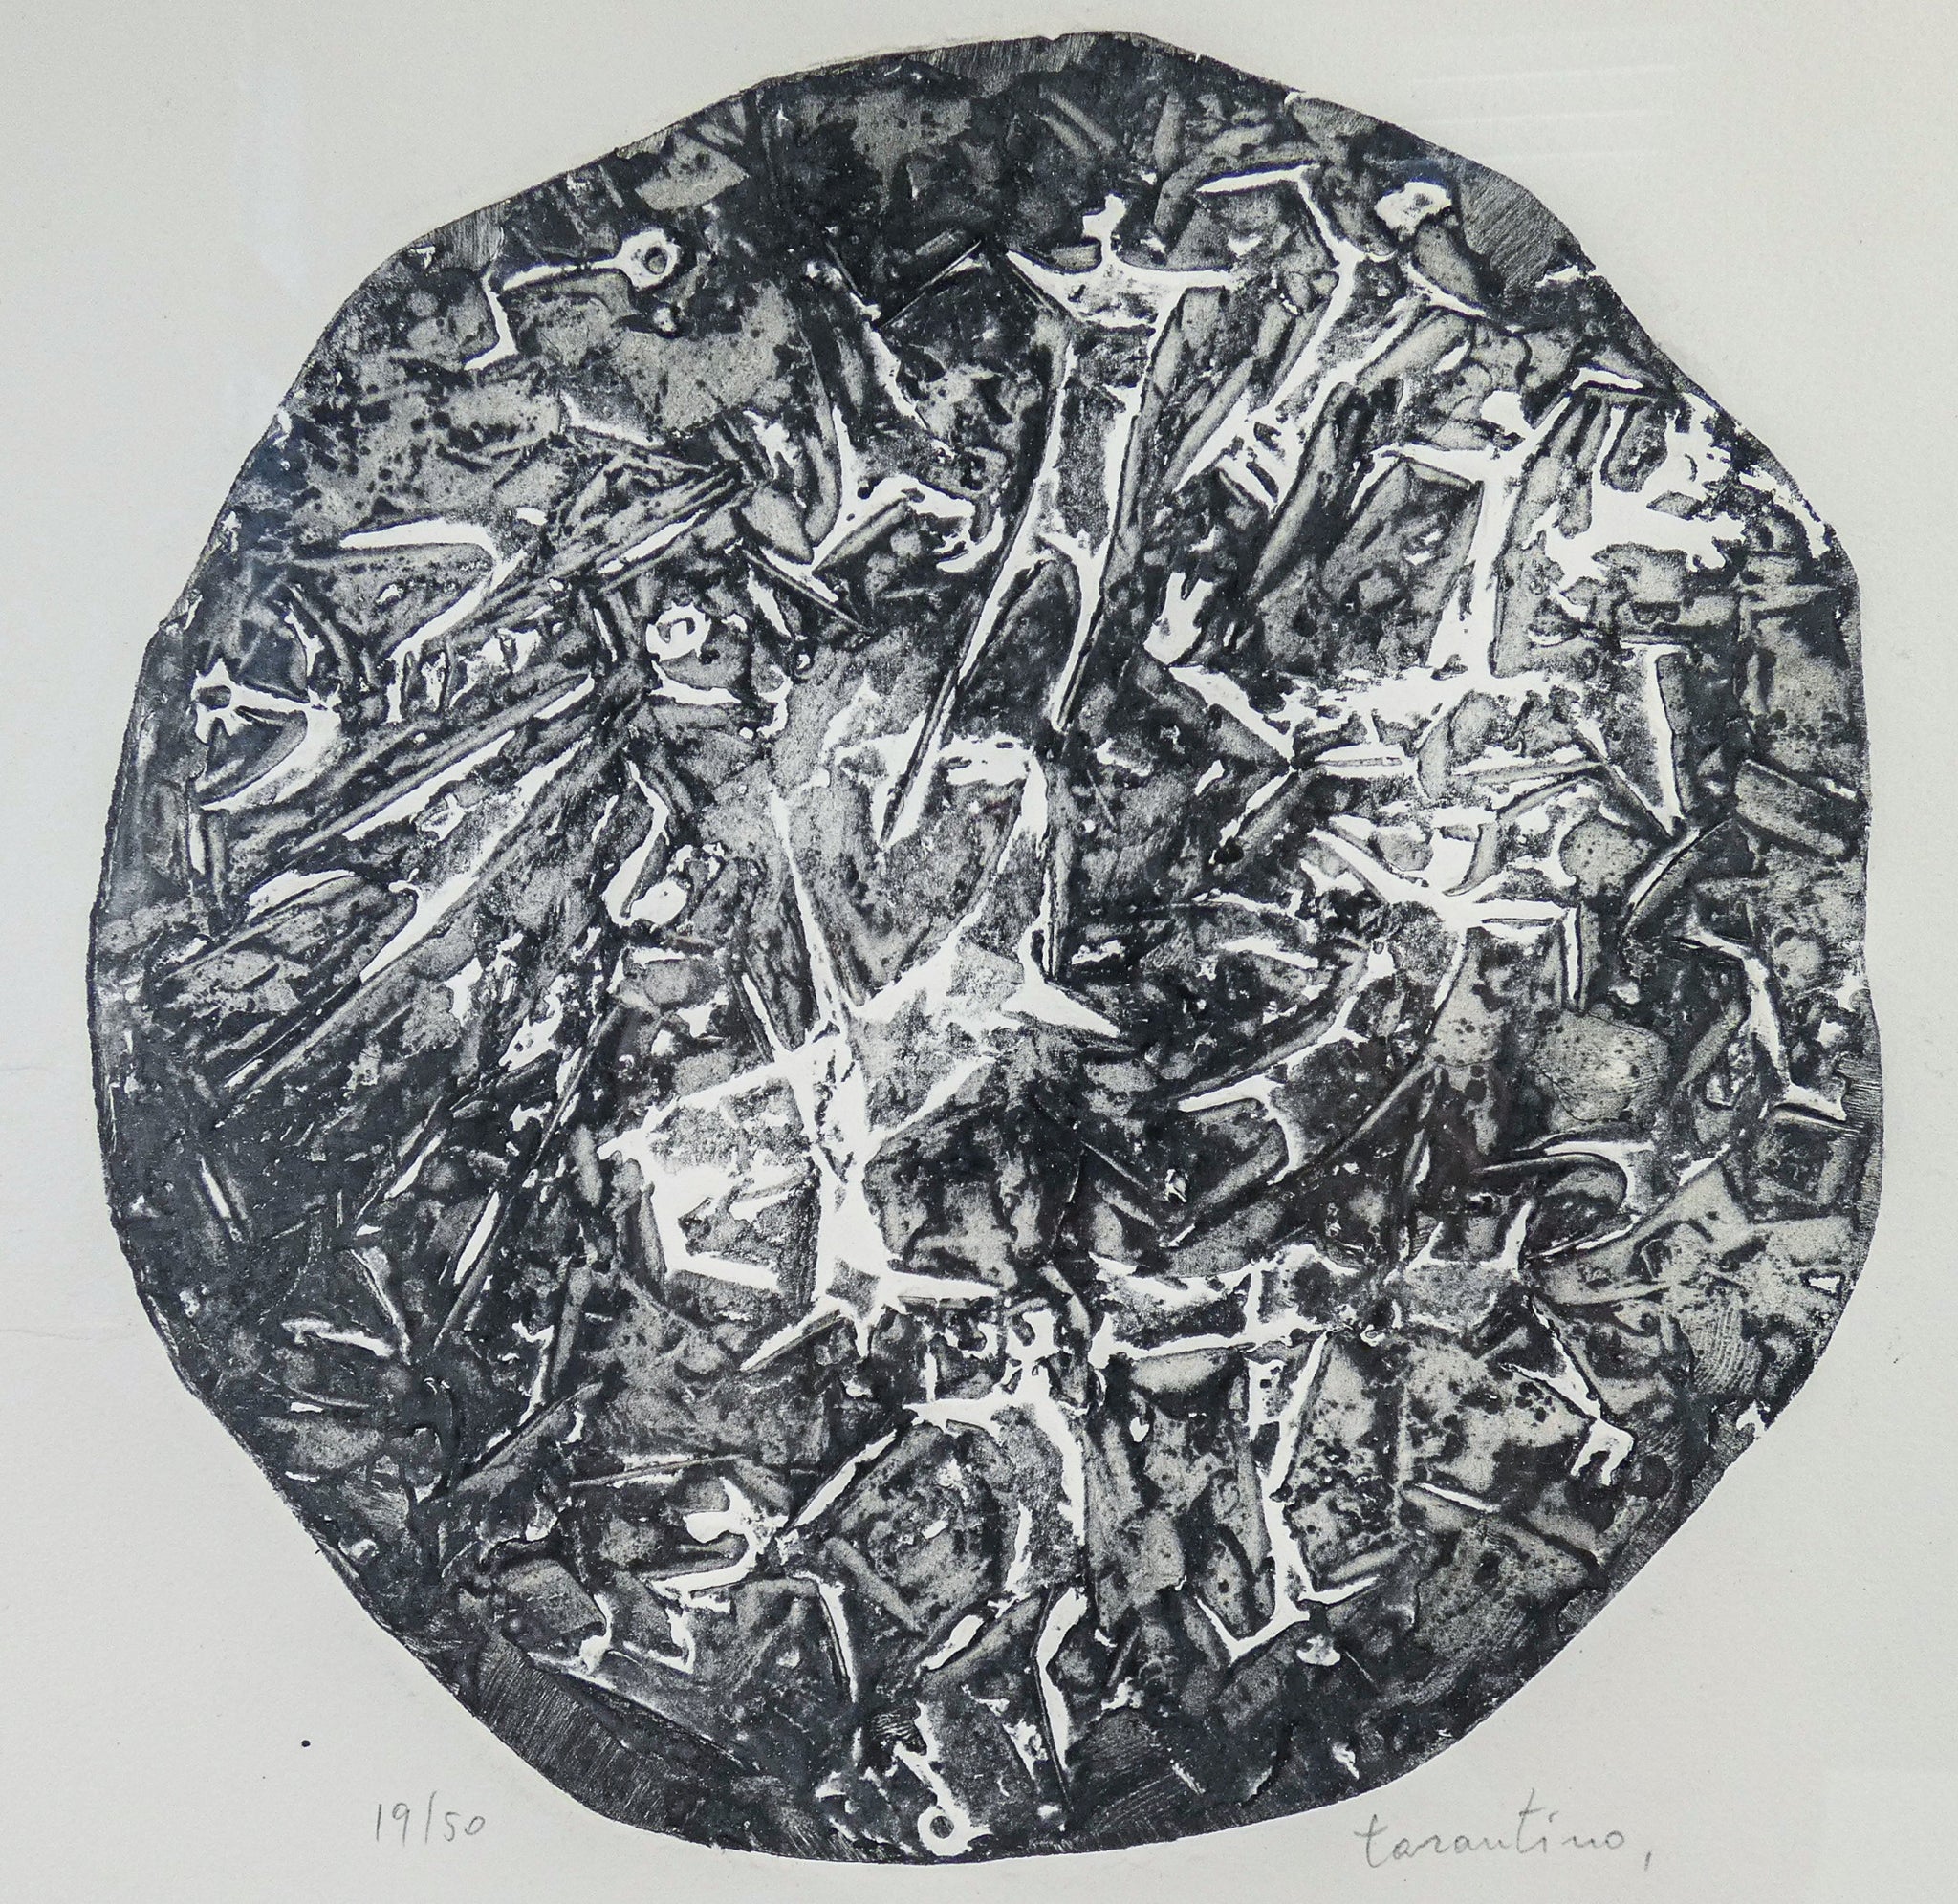 acquaforte giuseppe tarantino 1968 battaglia 2 stampa grafica numerata quadro